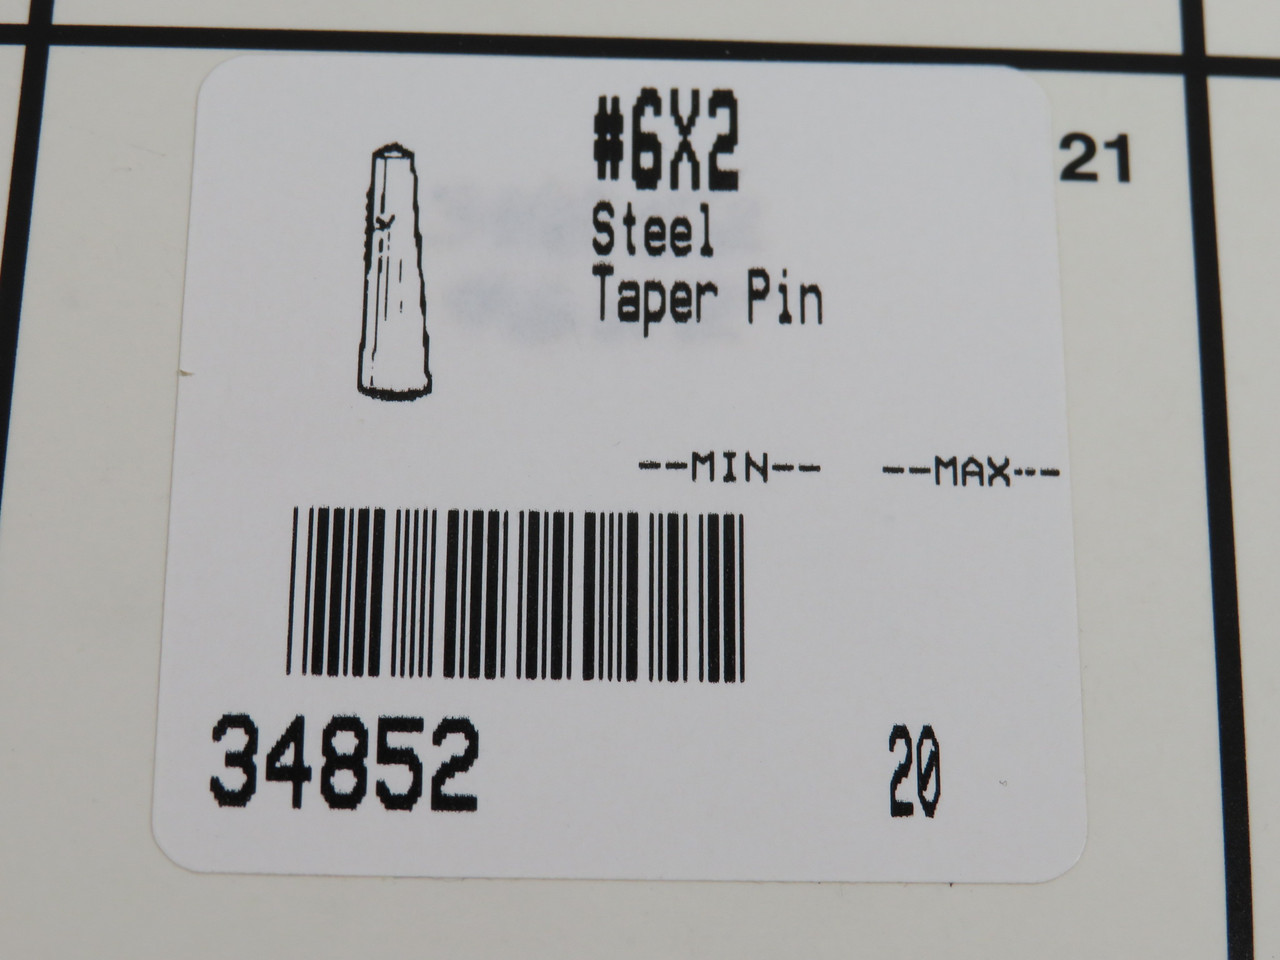 Barnes 34852 Steel Taper Pin #6 x 2" Lot of 3 NOP